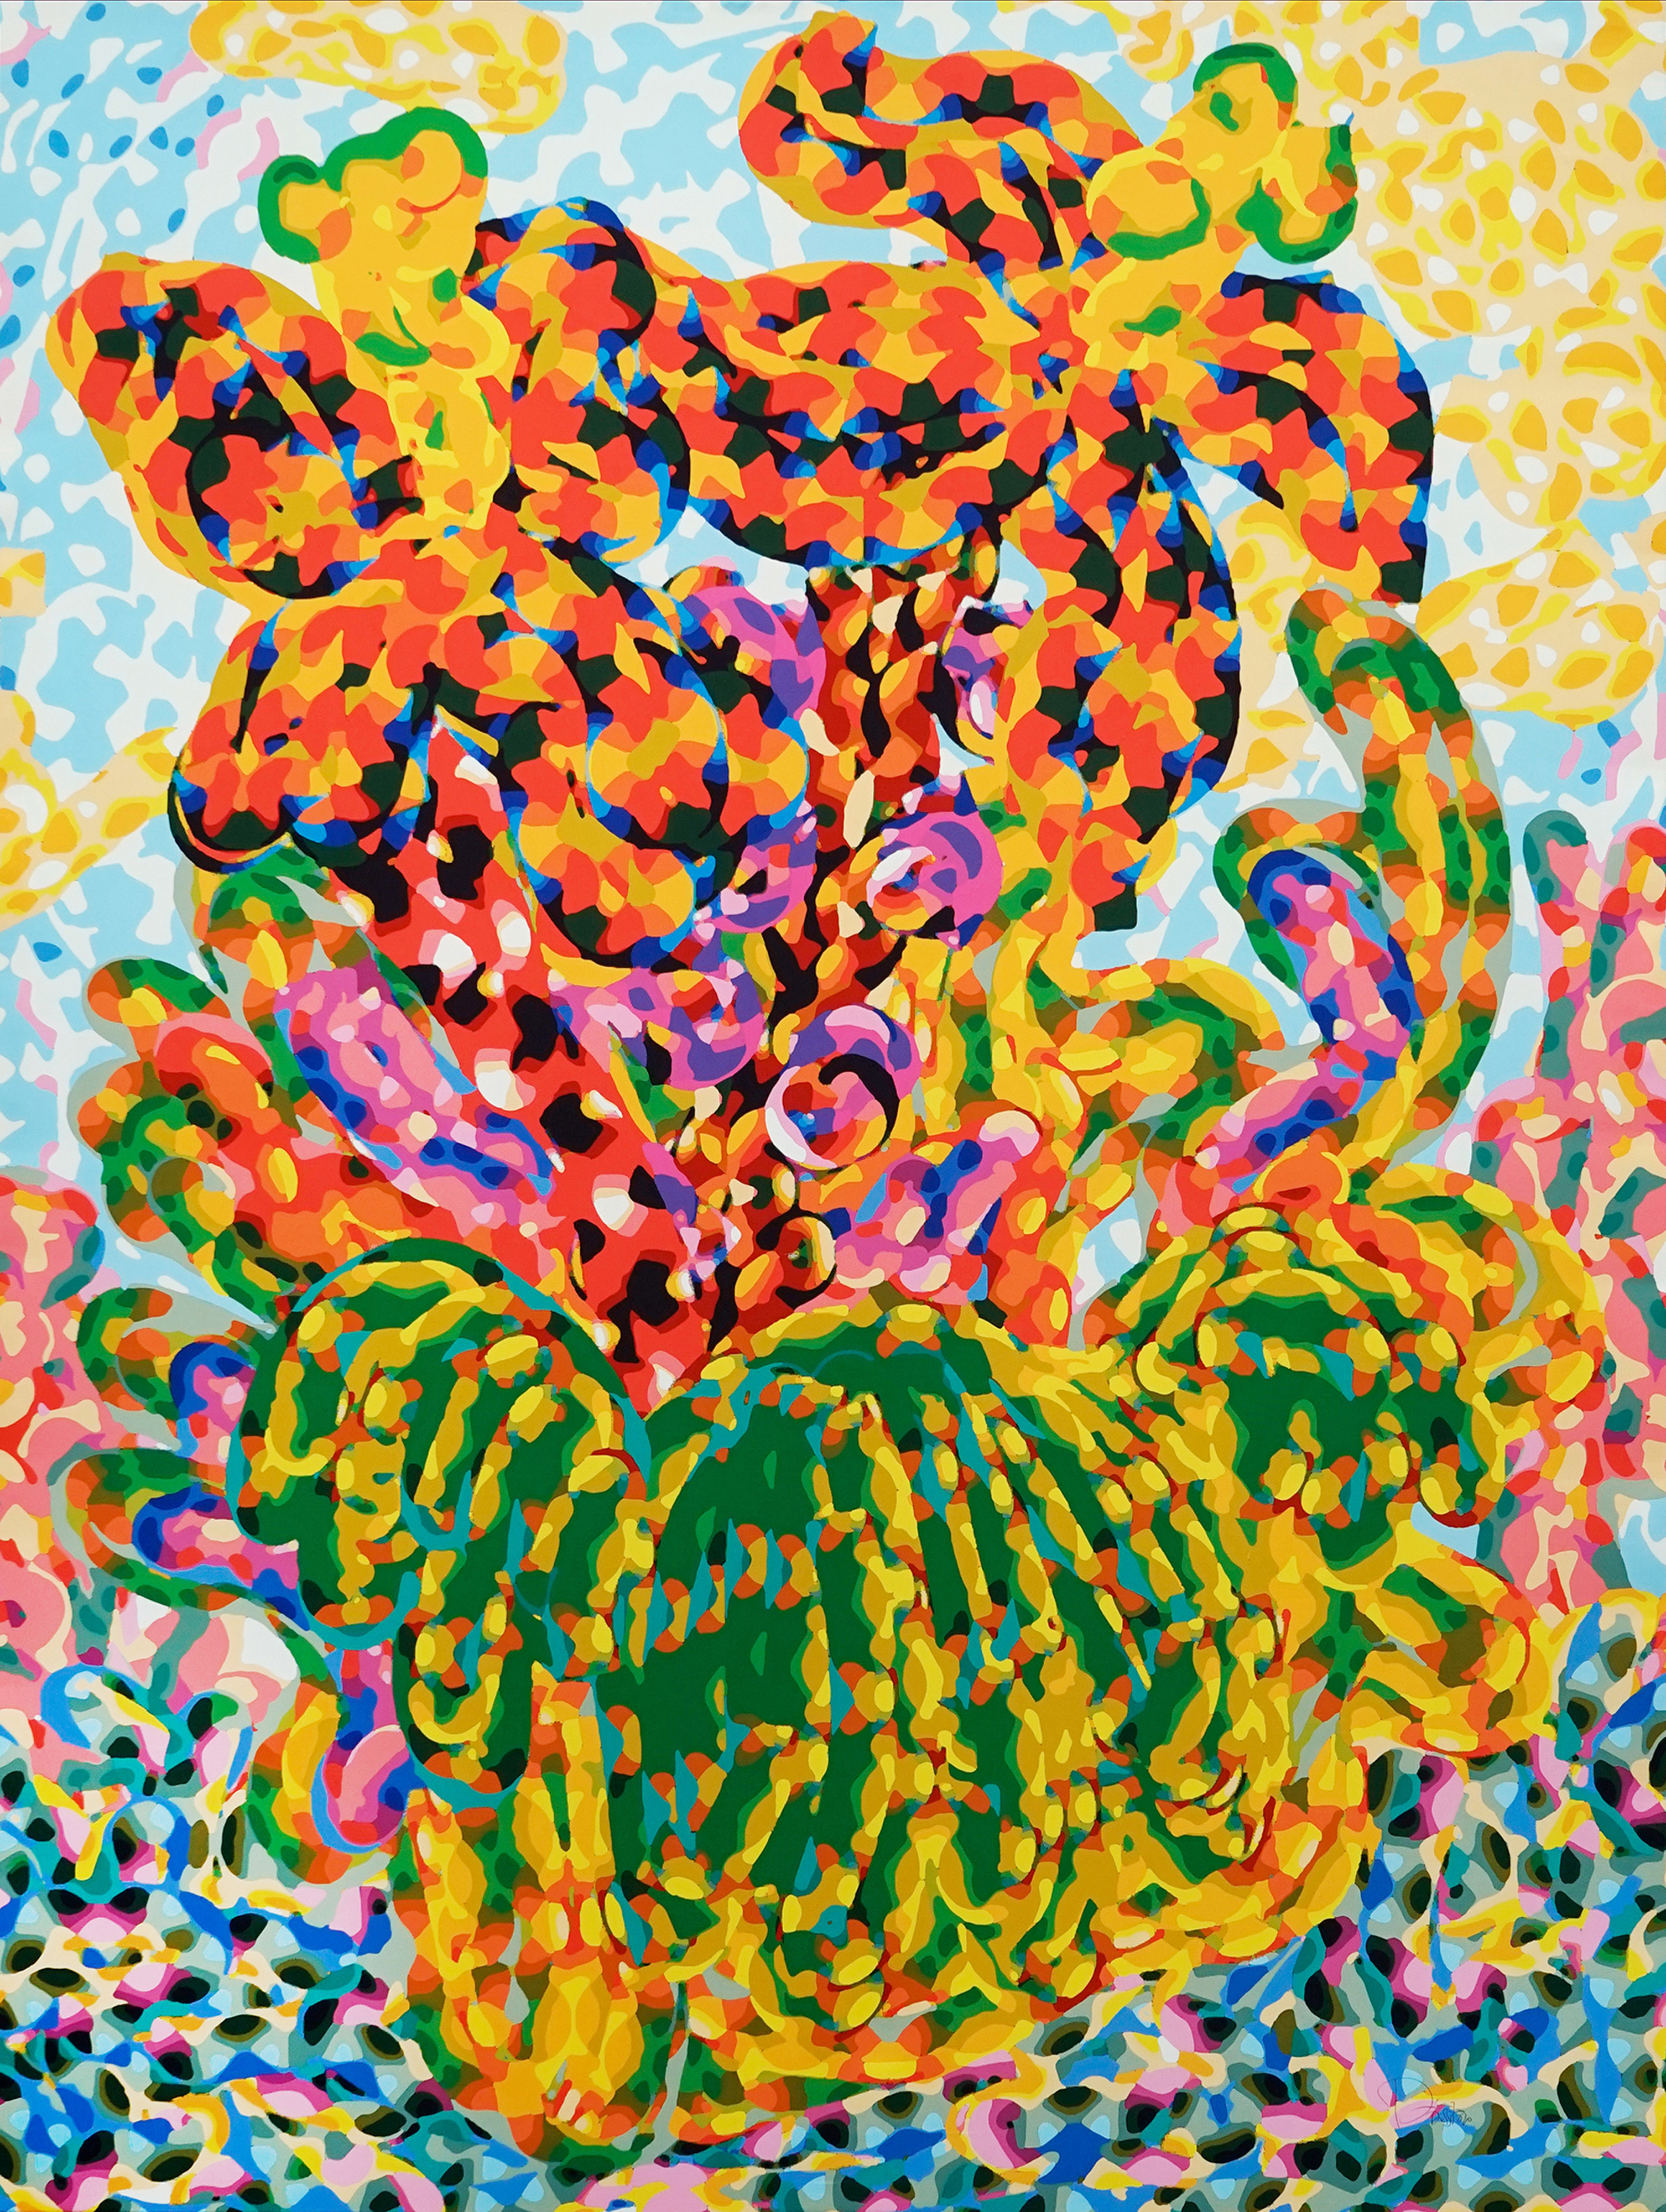 Galerie Barbara Thumm \ Diango Hernández: En el jardín de Anne (DHe-20-024) \ En el jardín de Anne (2020)